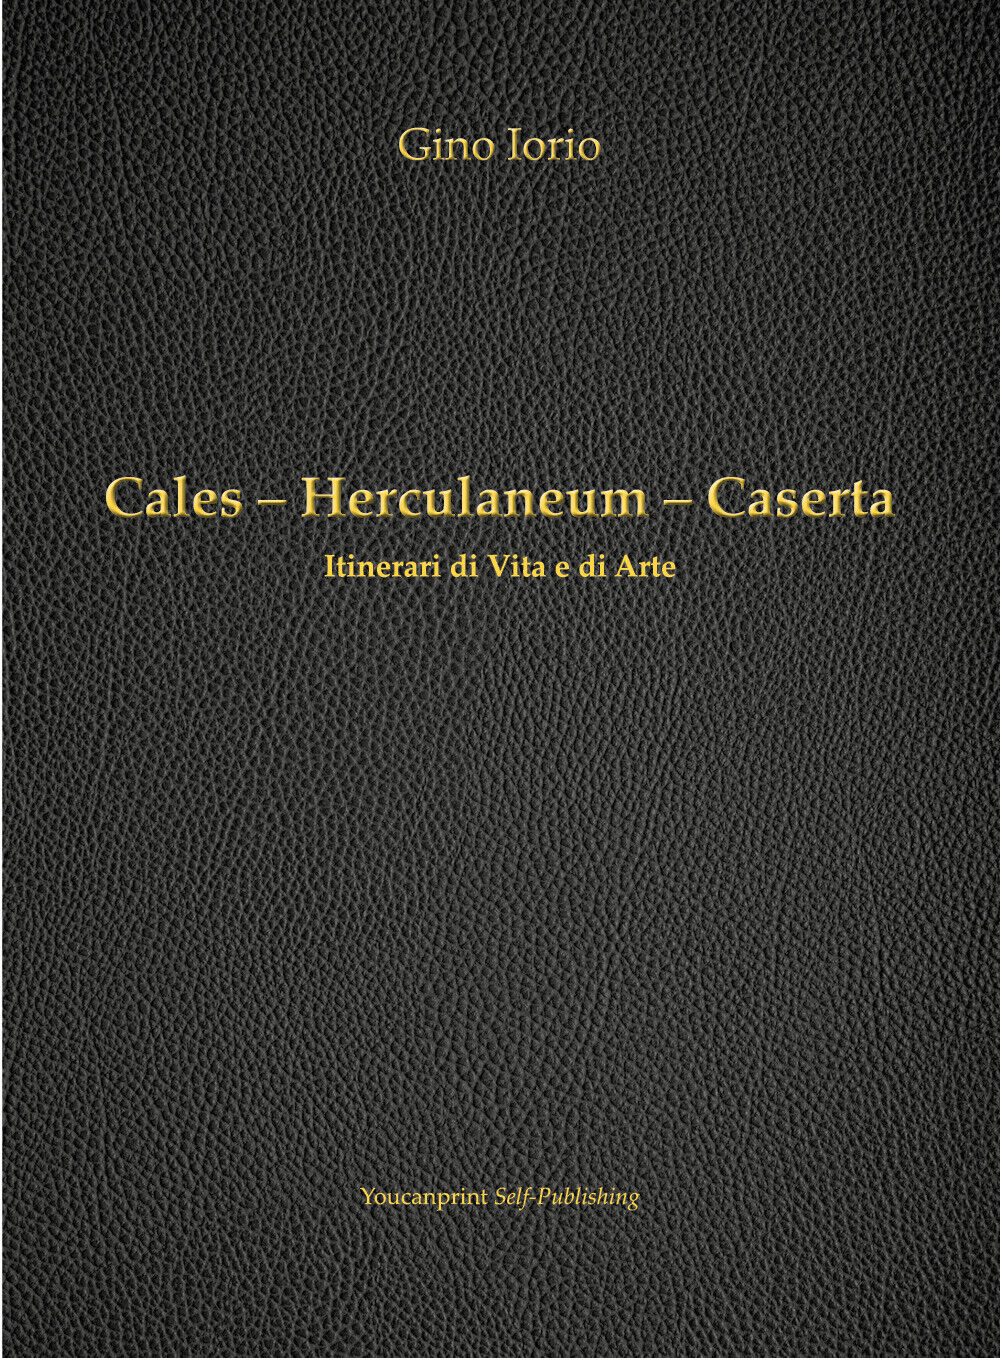 Cales - Herculaneum - Caserta di Gino Iorio,  2018,  Youcanprint